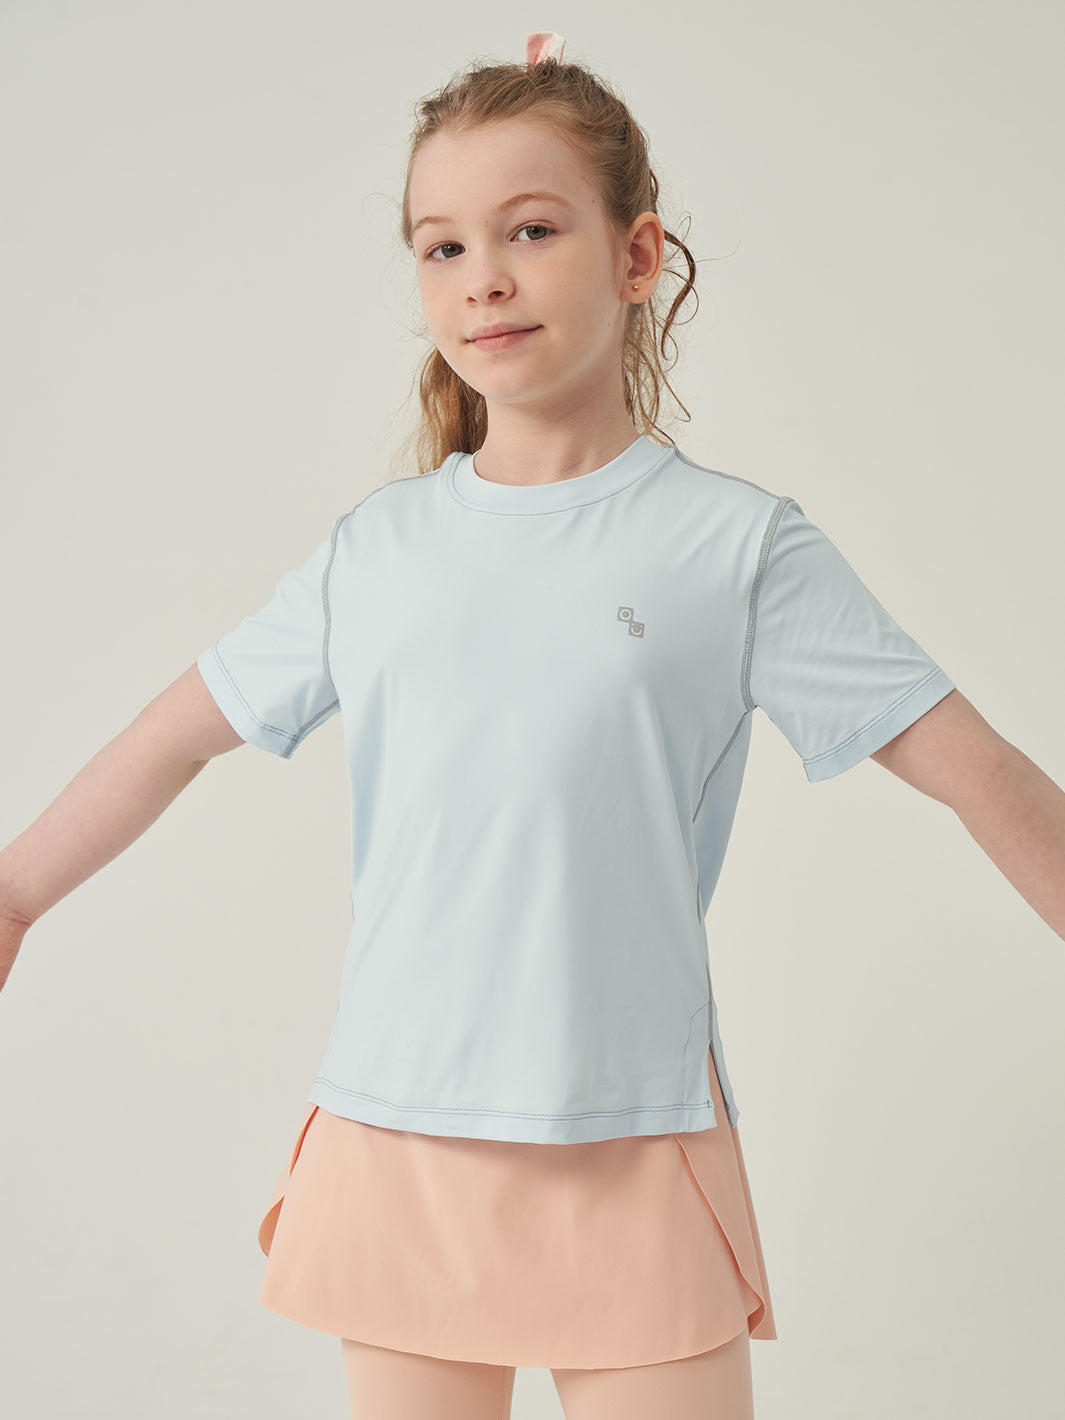 Camiseta suave transpirable para niños